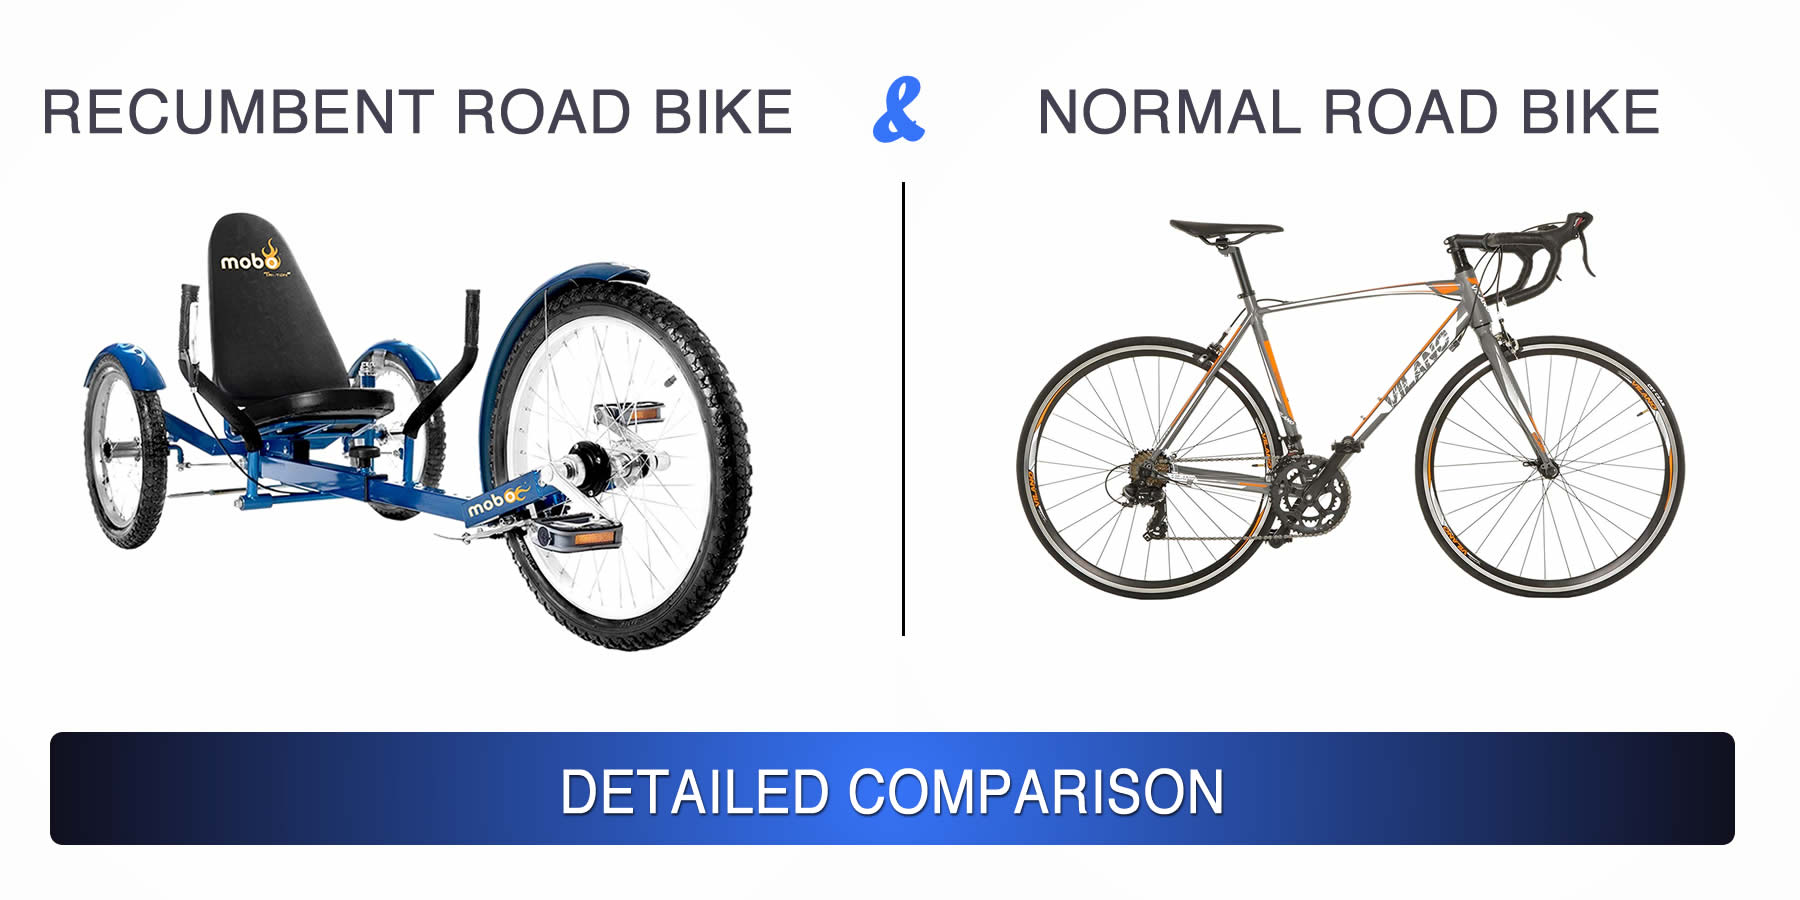 Recumbent Road Bikes & Normal Road Bikes – Detailed Comparison